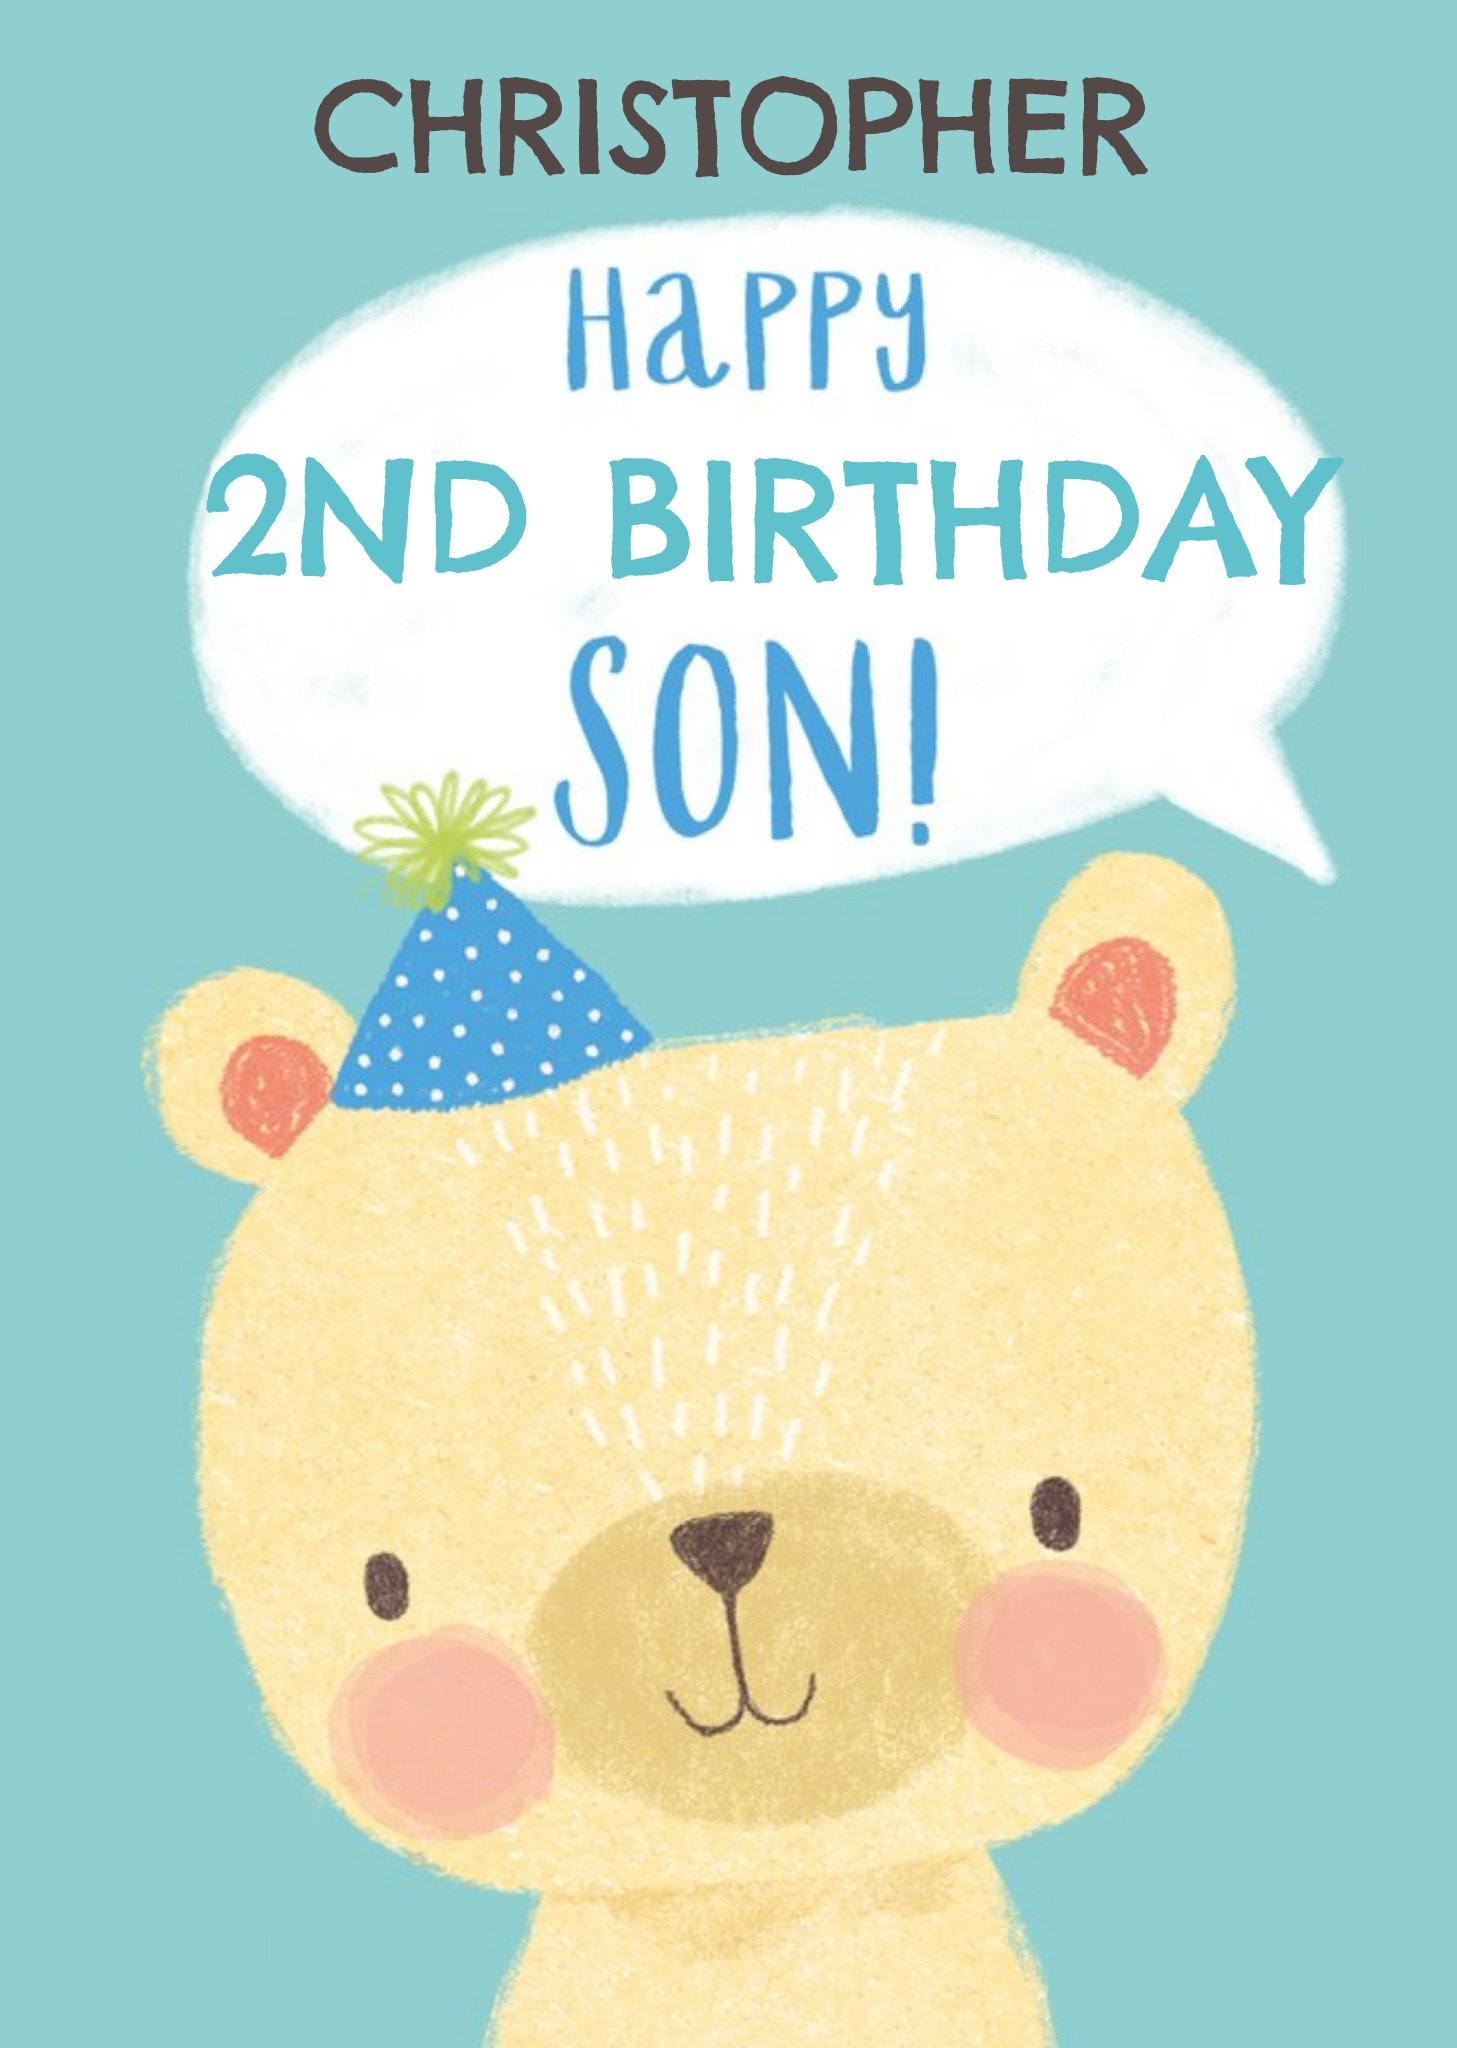 Moonpig Cute Simple Illustration Of A Teddy Bear Happy 2nd Birthday Son Card Ecard